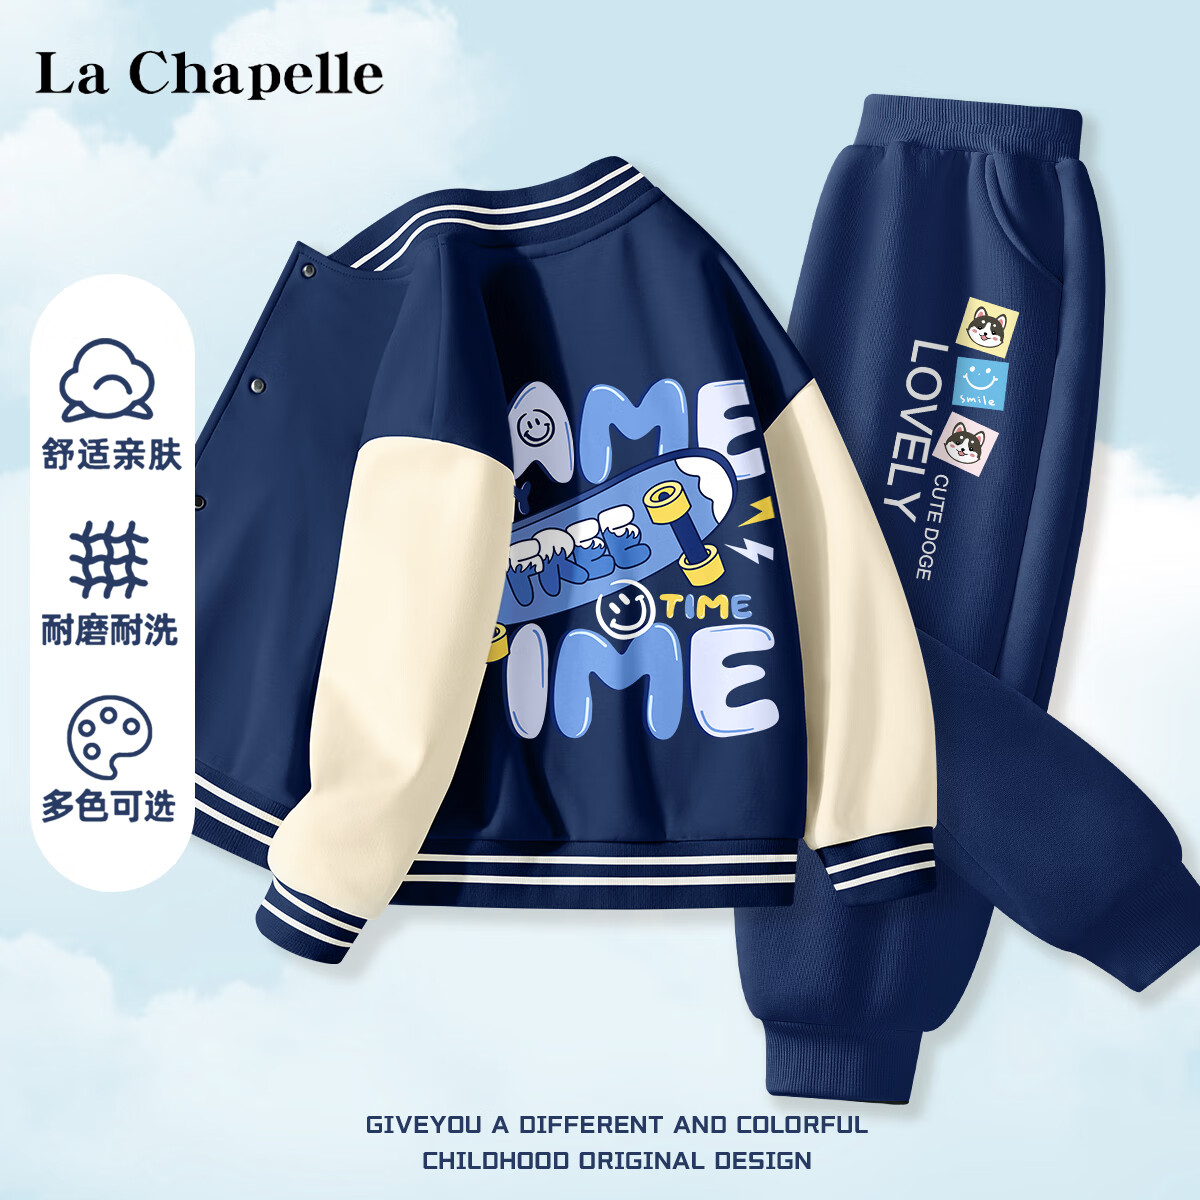 La Chapelle 儿童棒球服套装(外套+卫裤) 券后59.9元